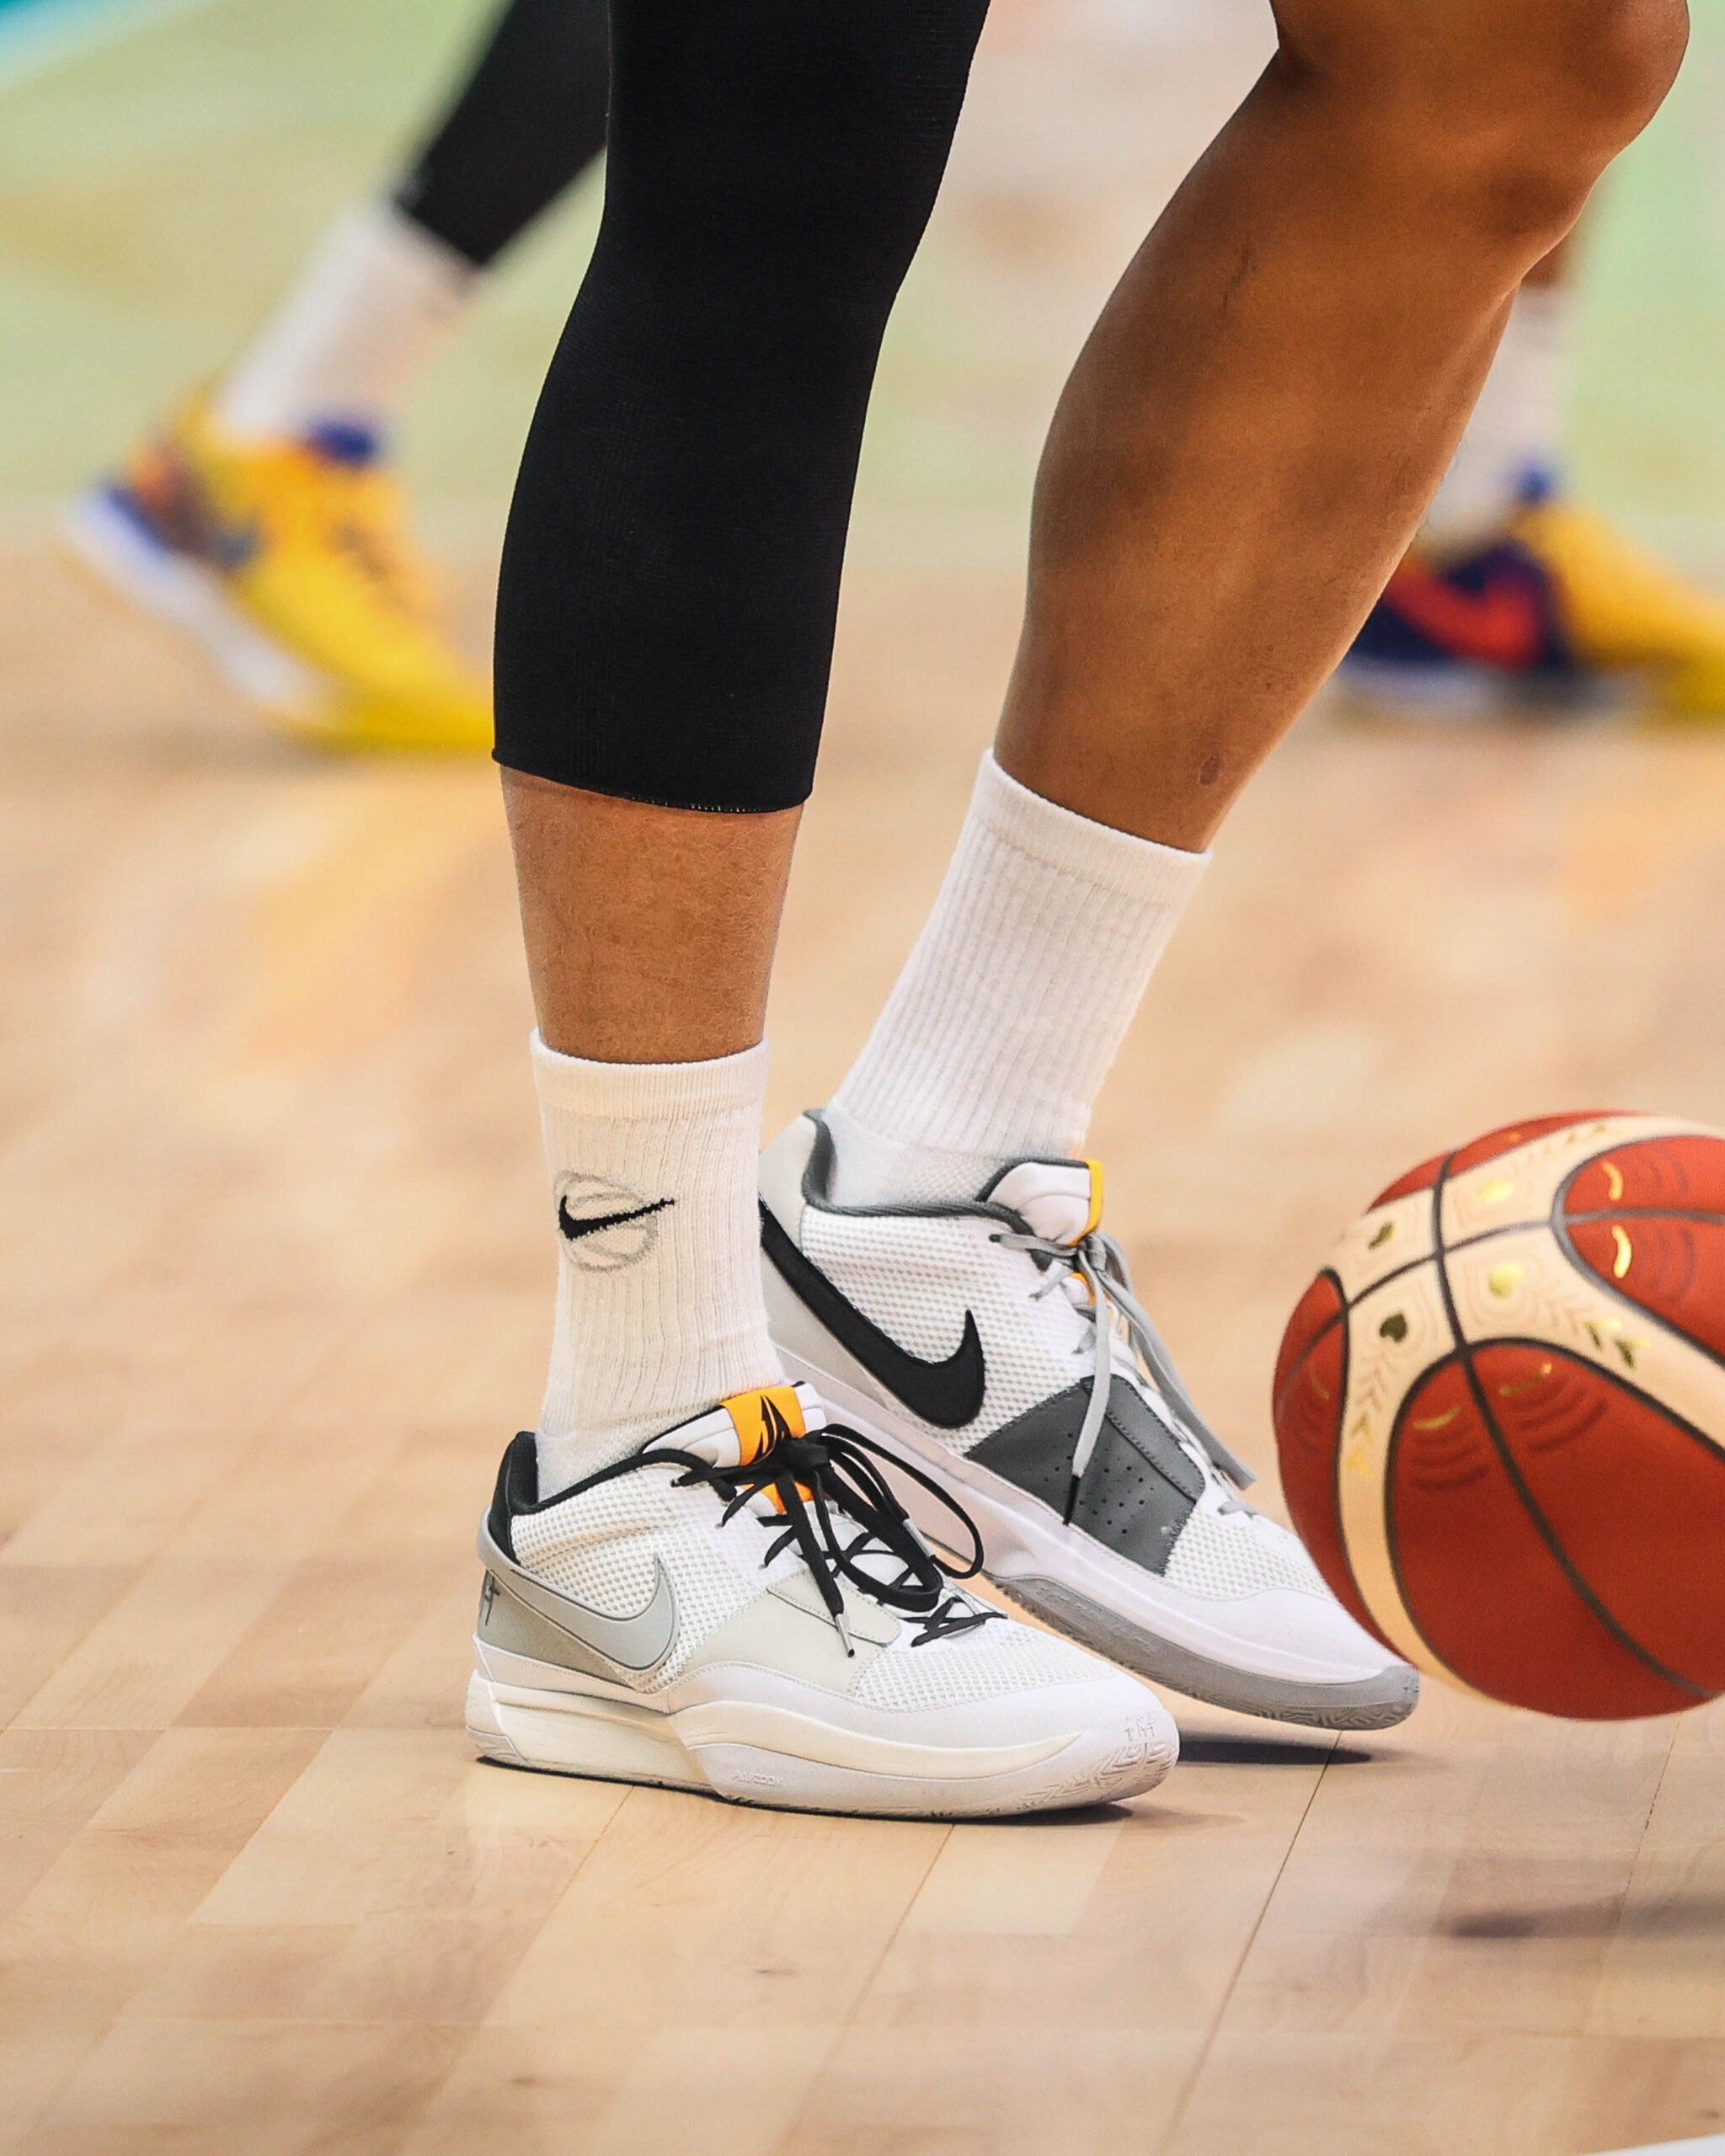 Japeth Aguilar basketball shoes: Nike Ja 1 in Light Smoke Grey